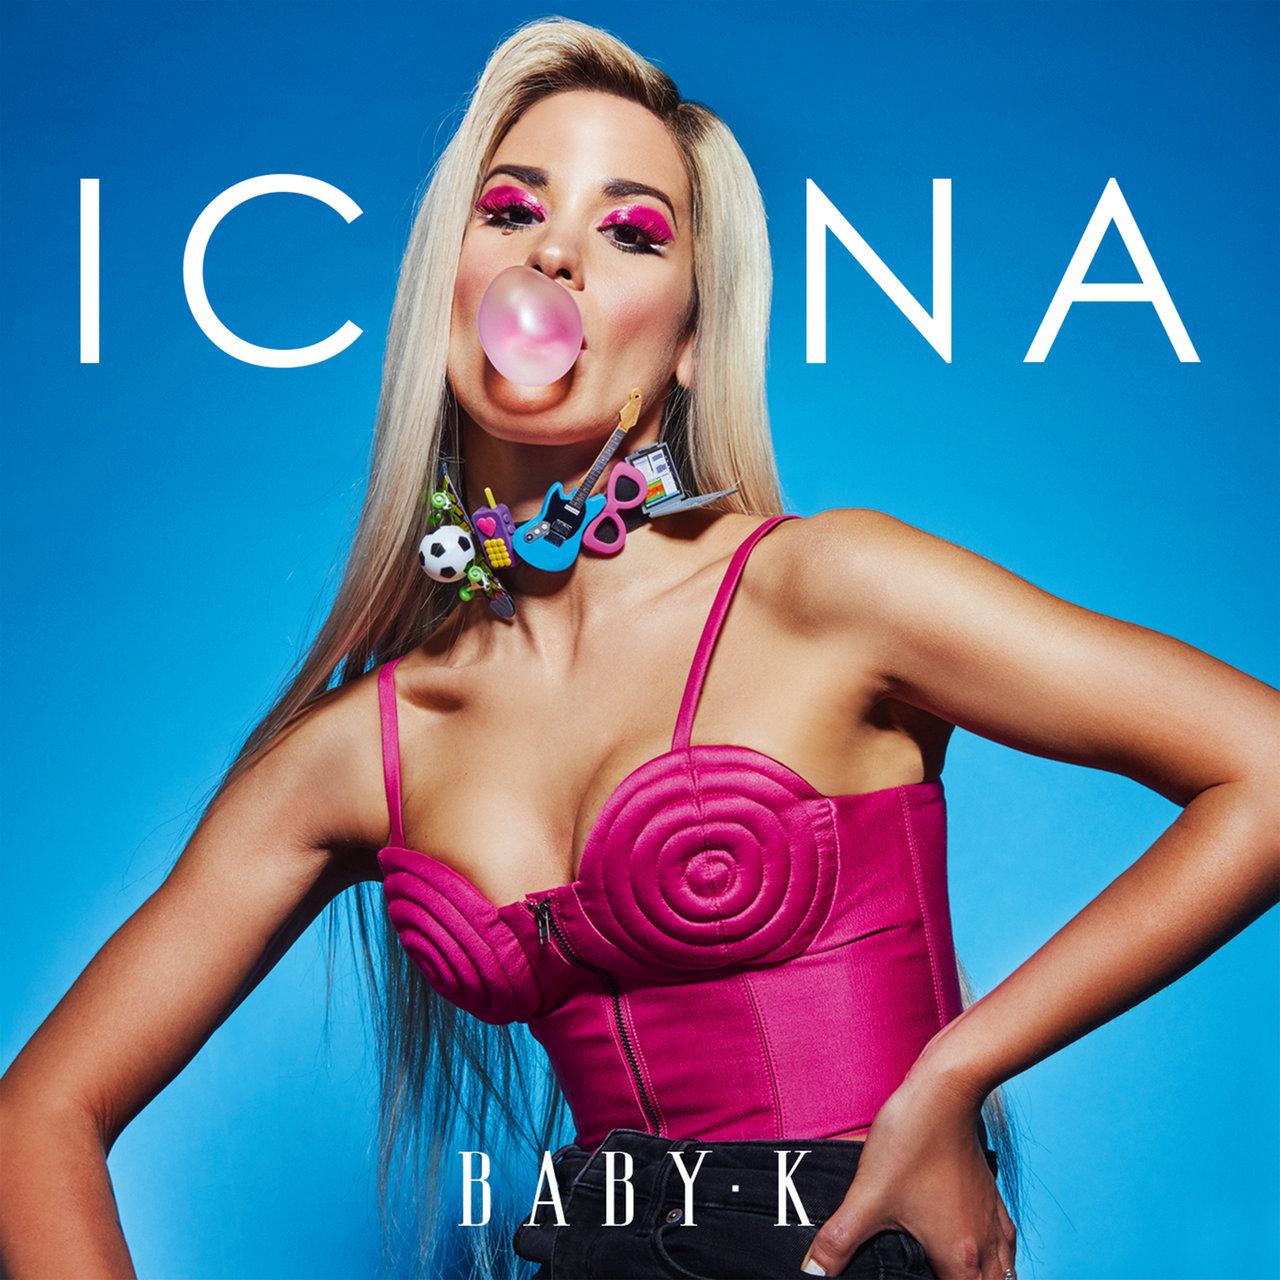 Baby K Icona cover artwork